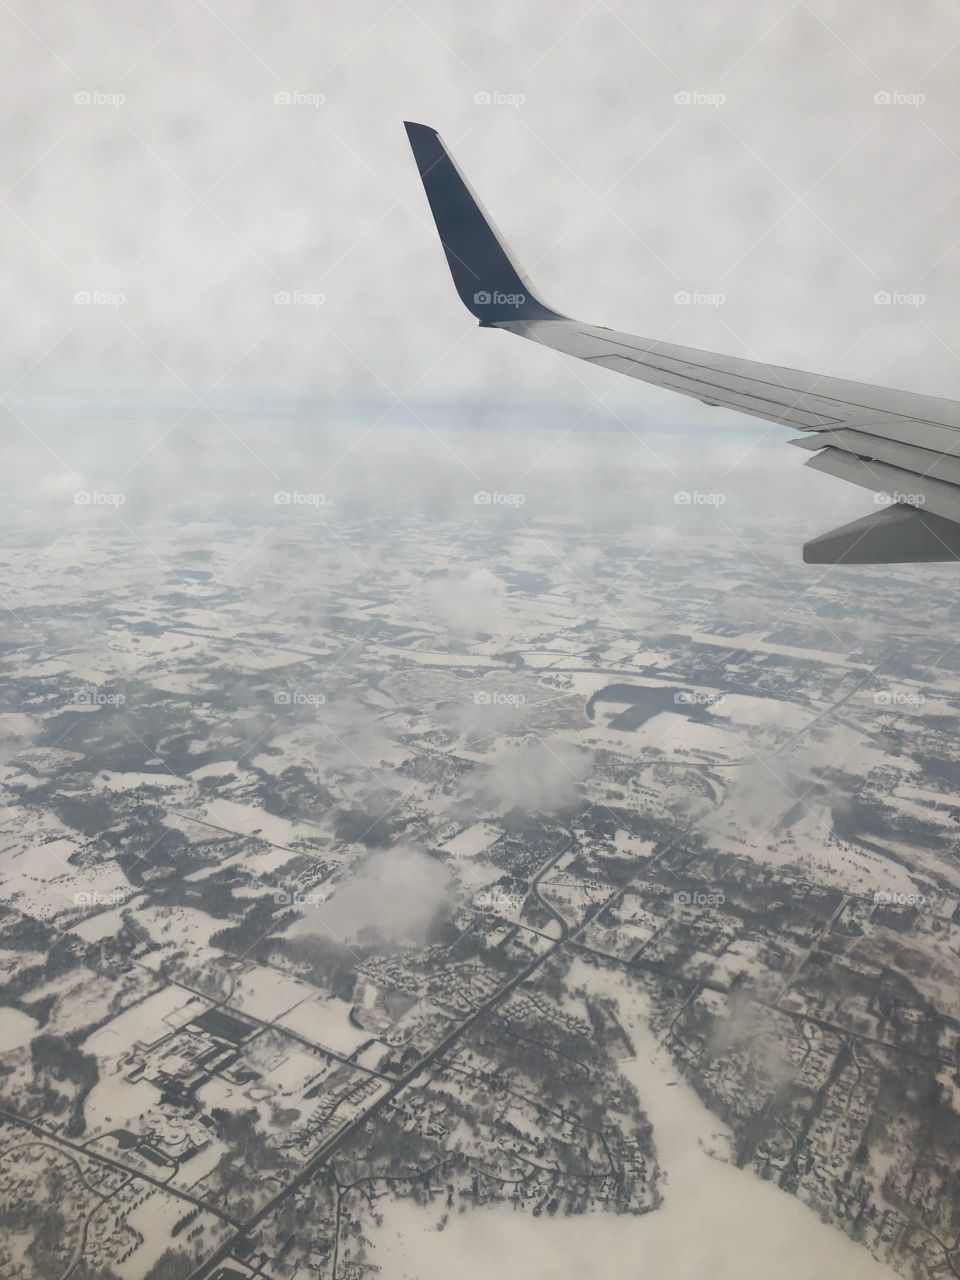 Minnesota looking cold